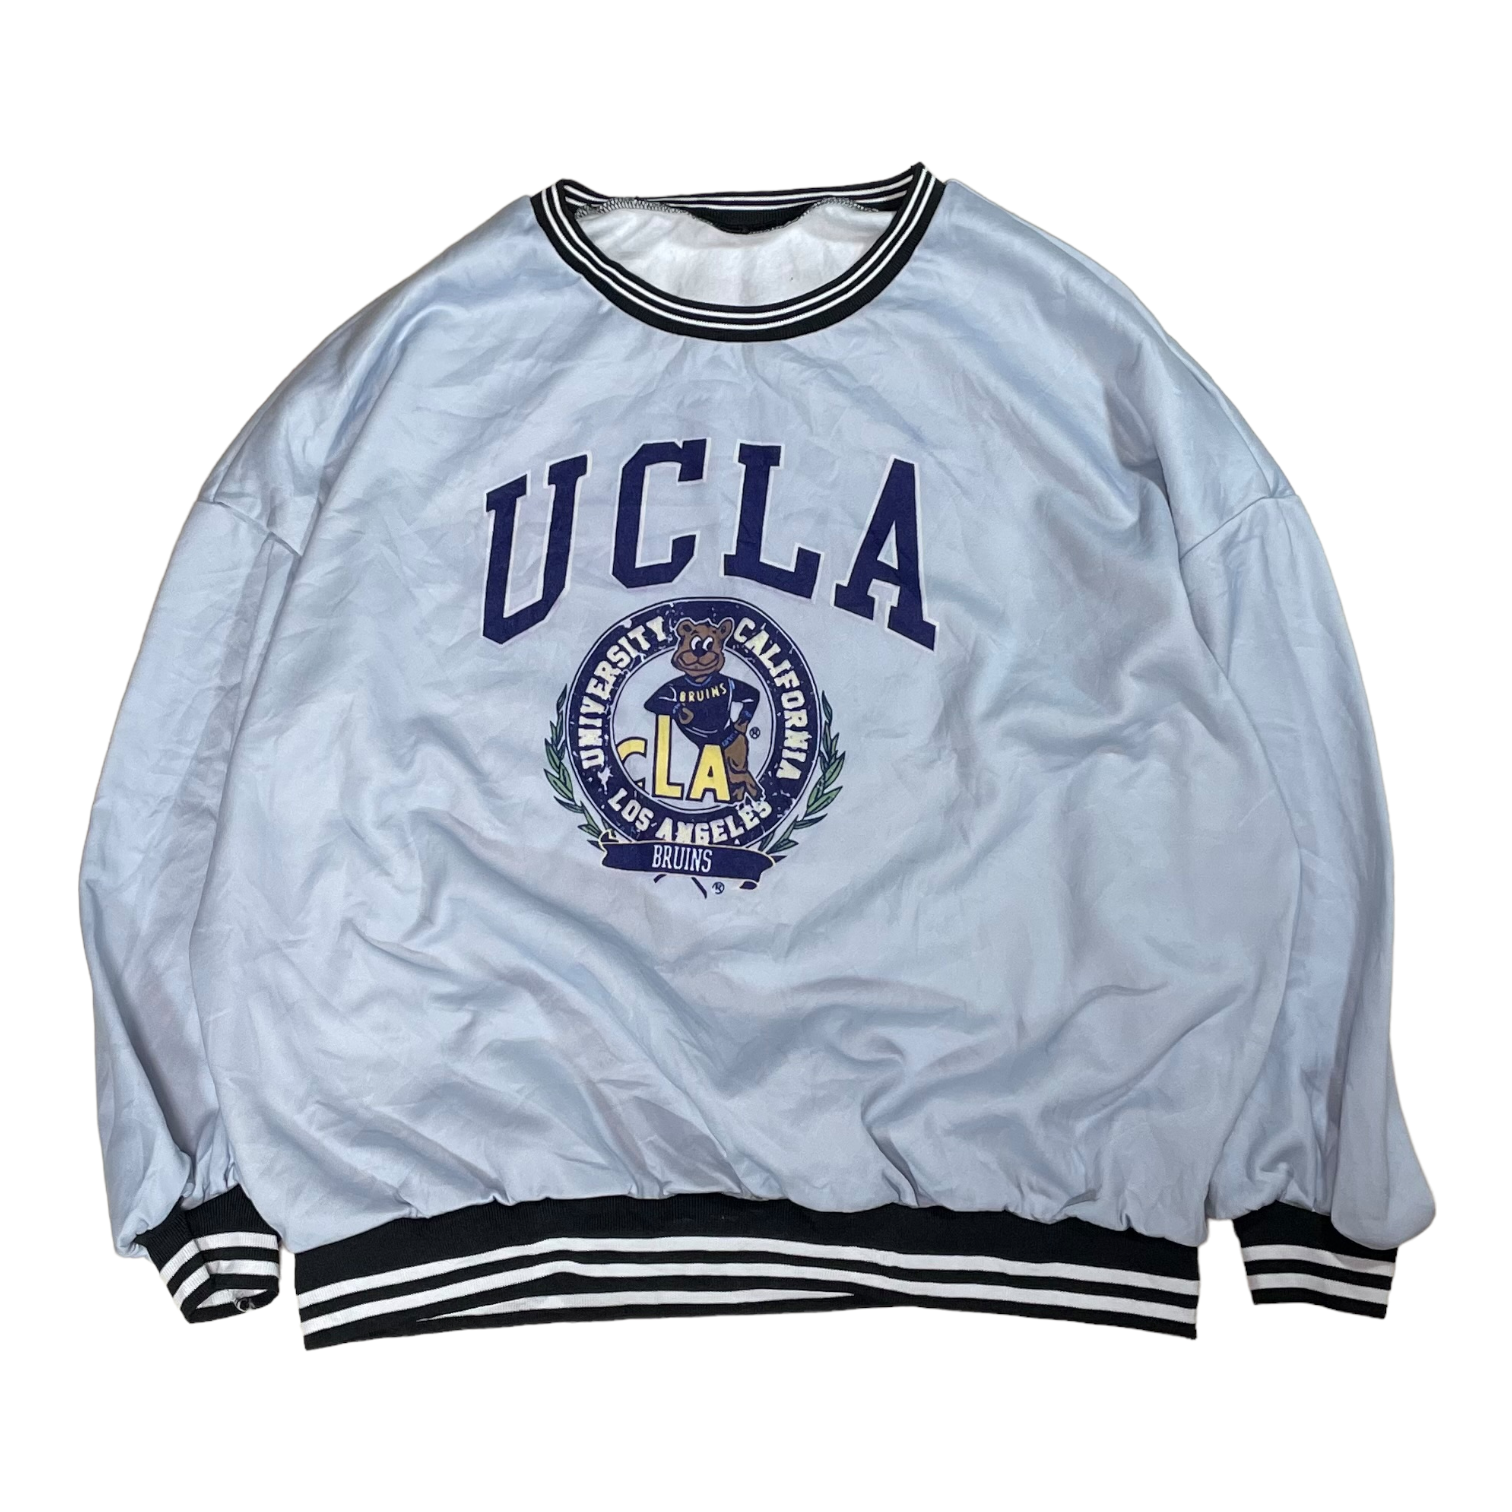 90s USA製 UCLA スウェットパンツ カリフォルニア大学ロサンゼルス校